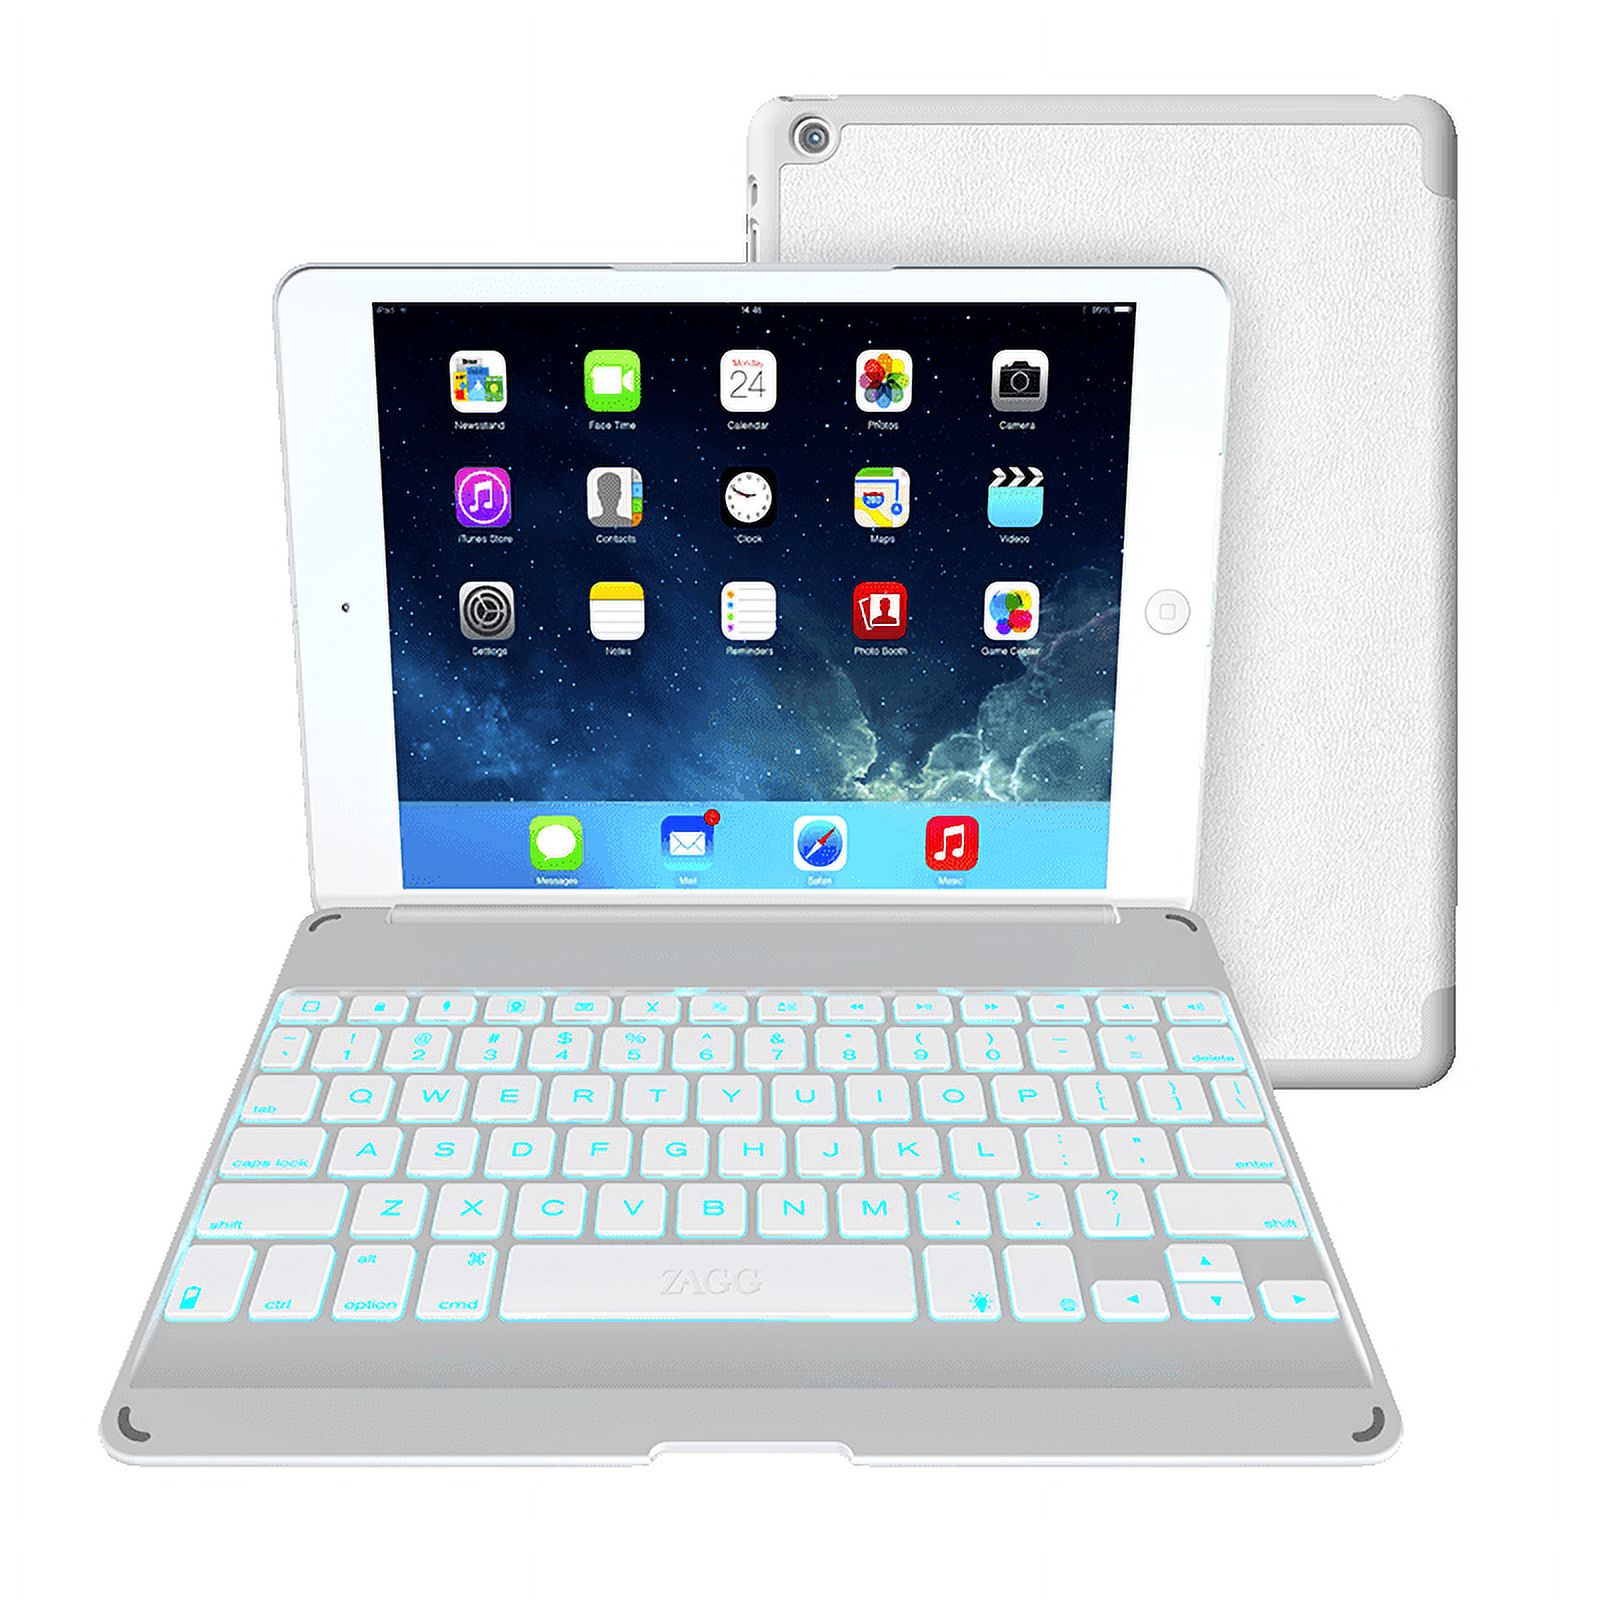 ZAGG ZAGGkeys Keyboard/Cover Case (Folio) iPad Air Tablet, White - image 2 of 2